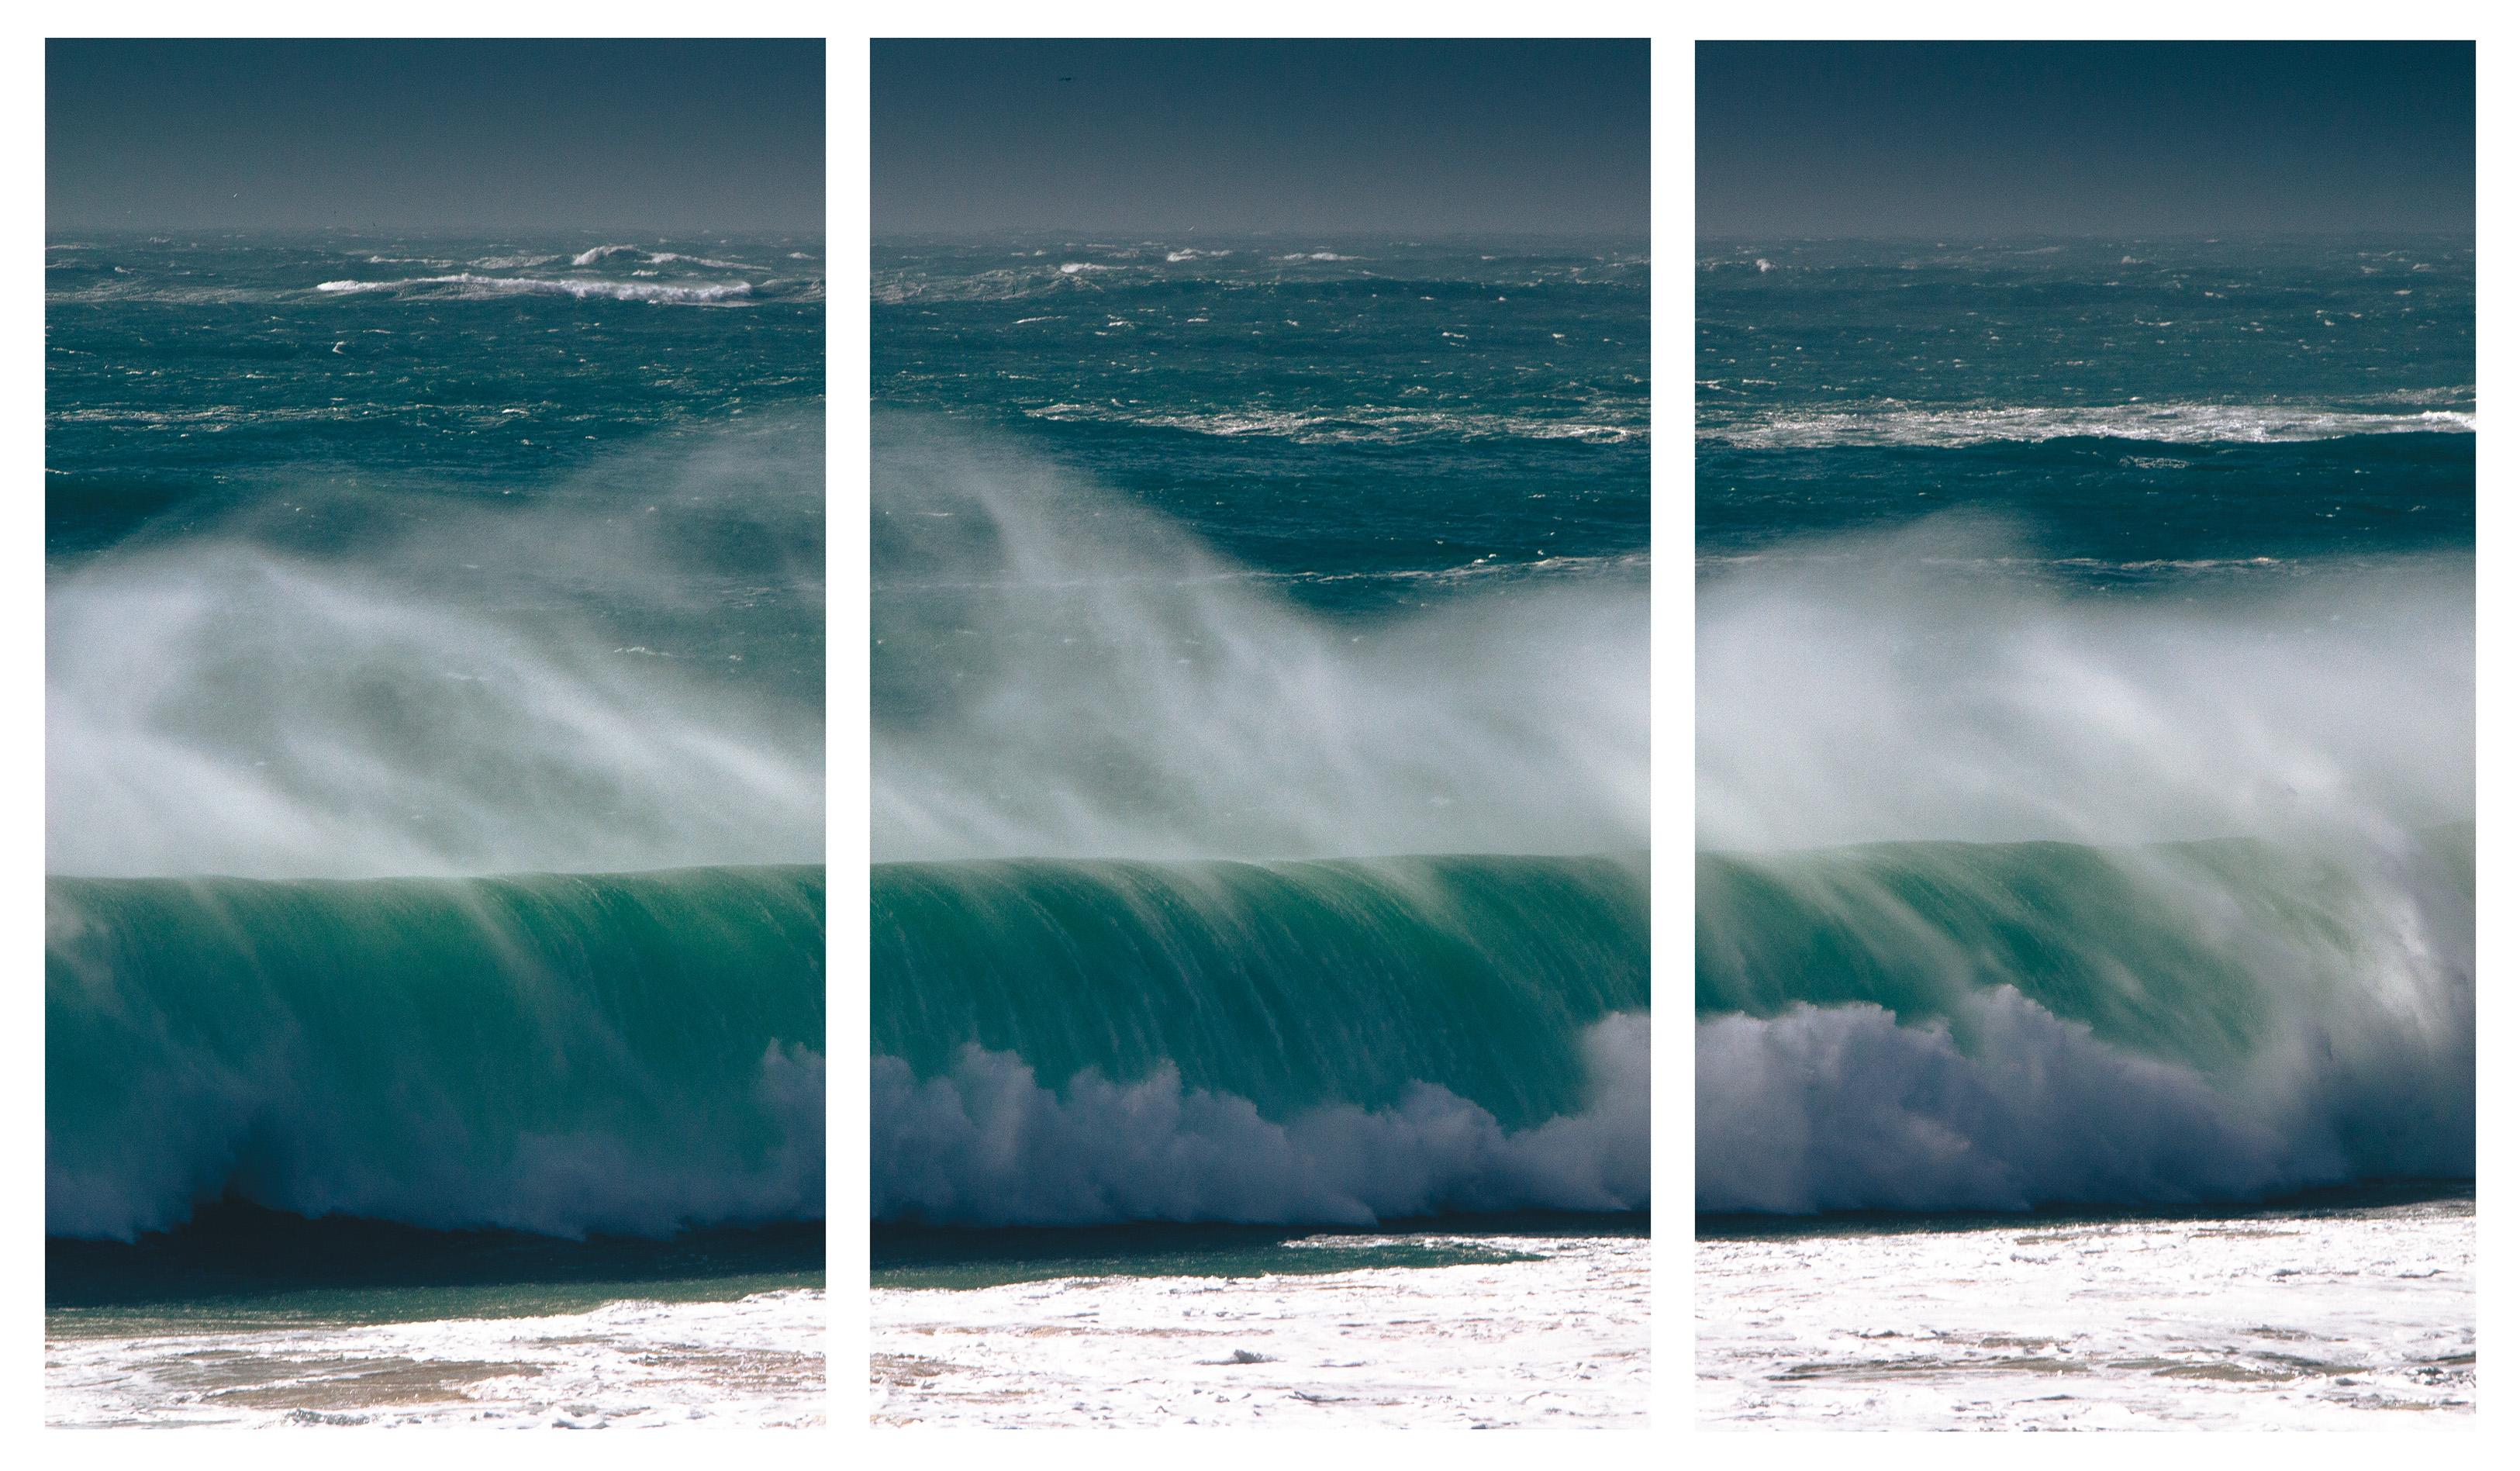 Großformatige Triptychon-Fotografie „Pounding Heart“. Ozean, Meer, Strand, Strandhauswelle